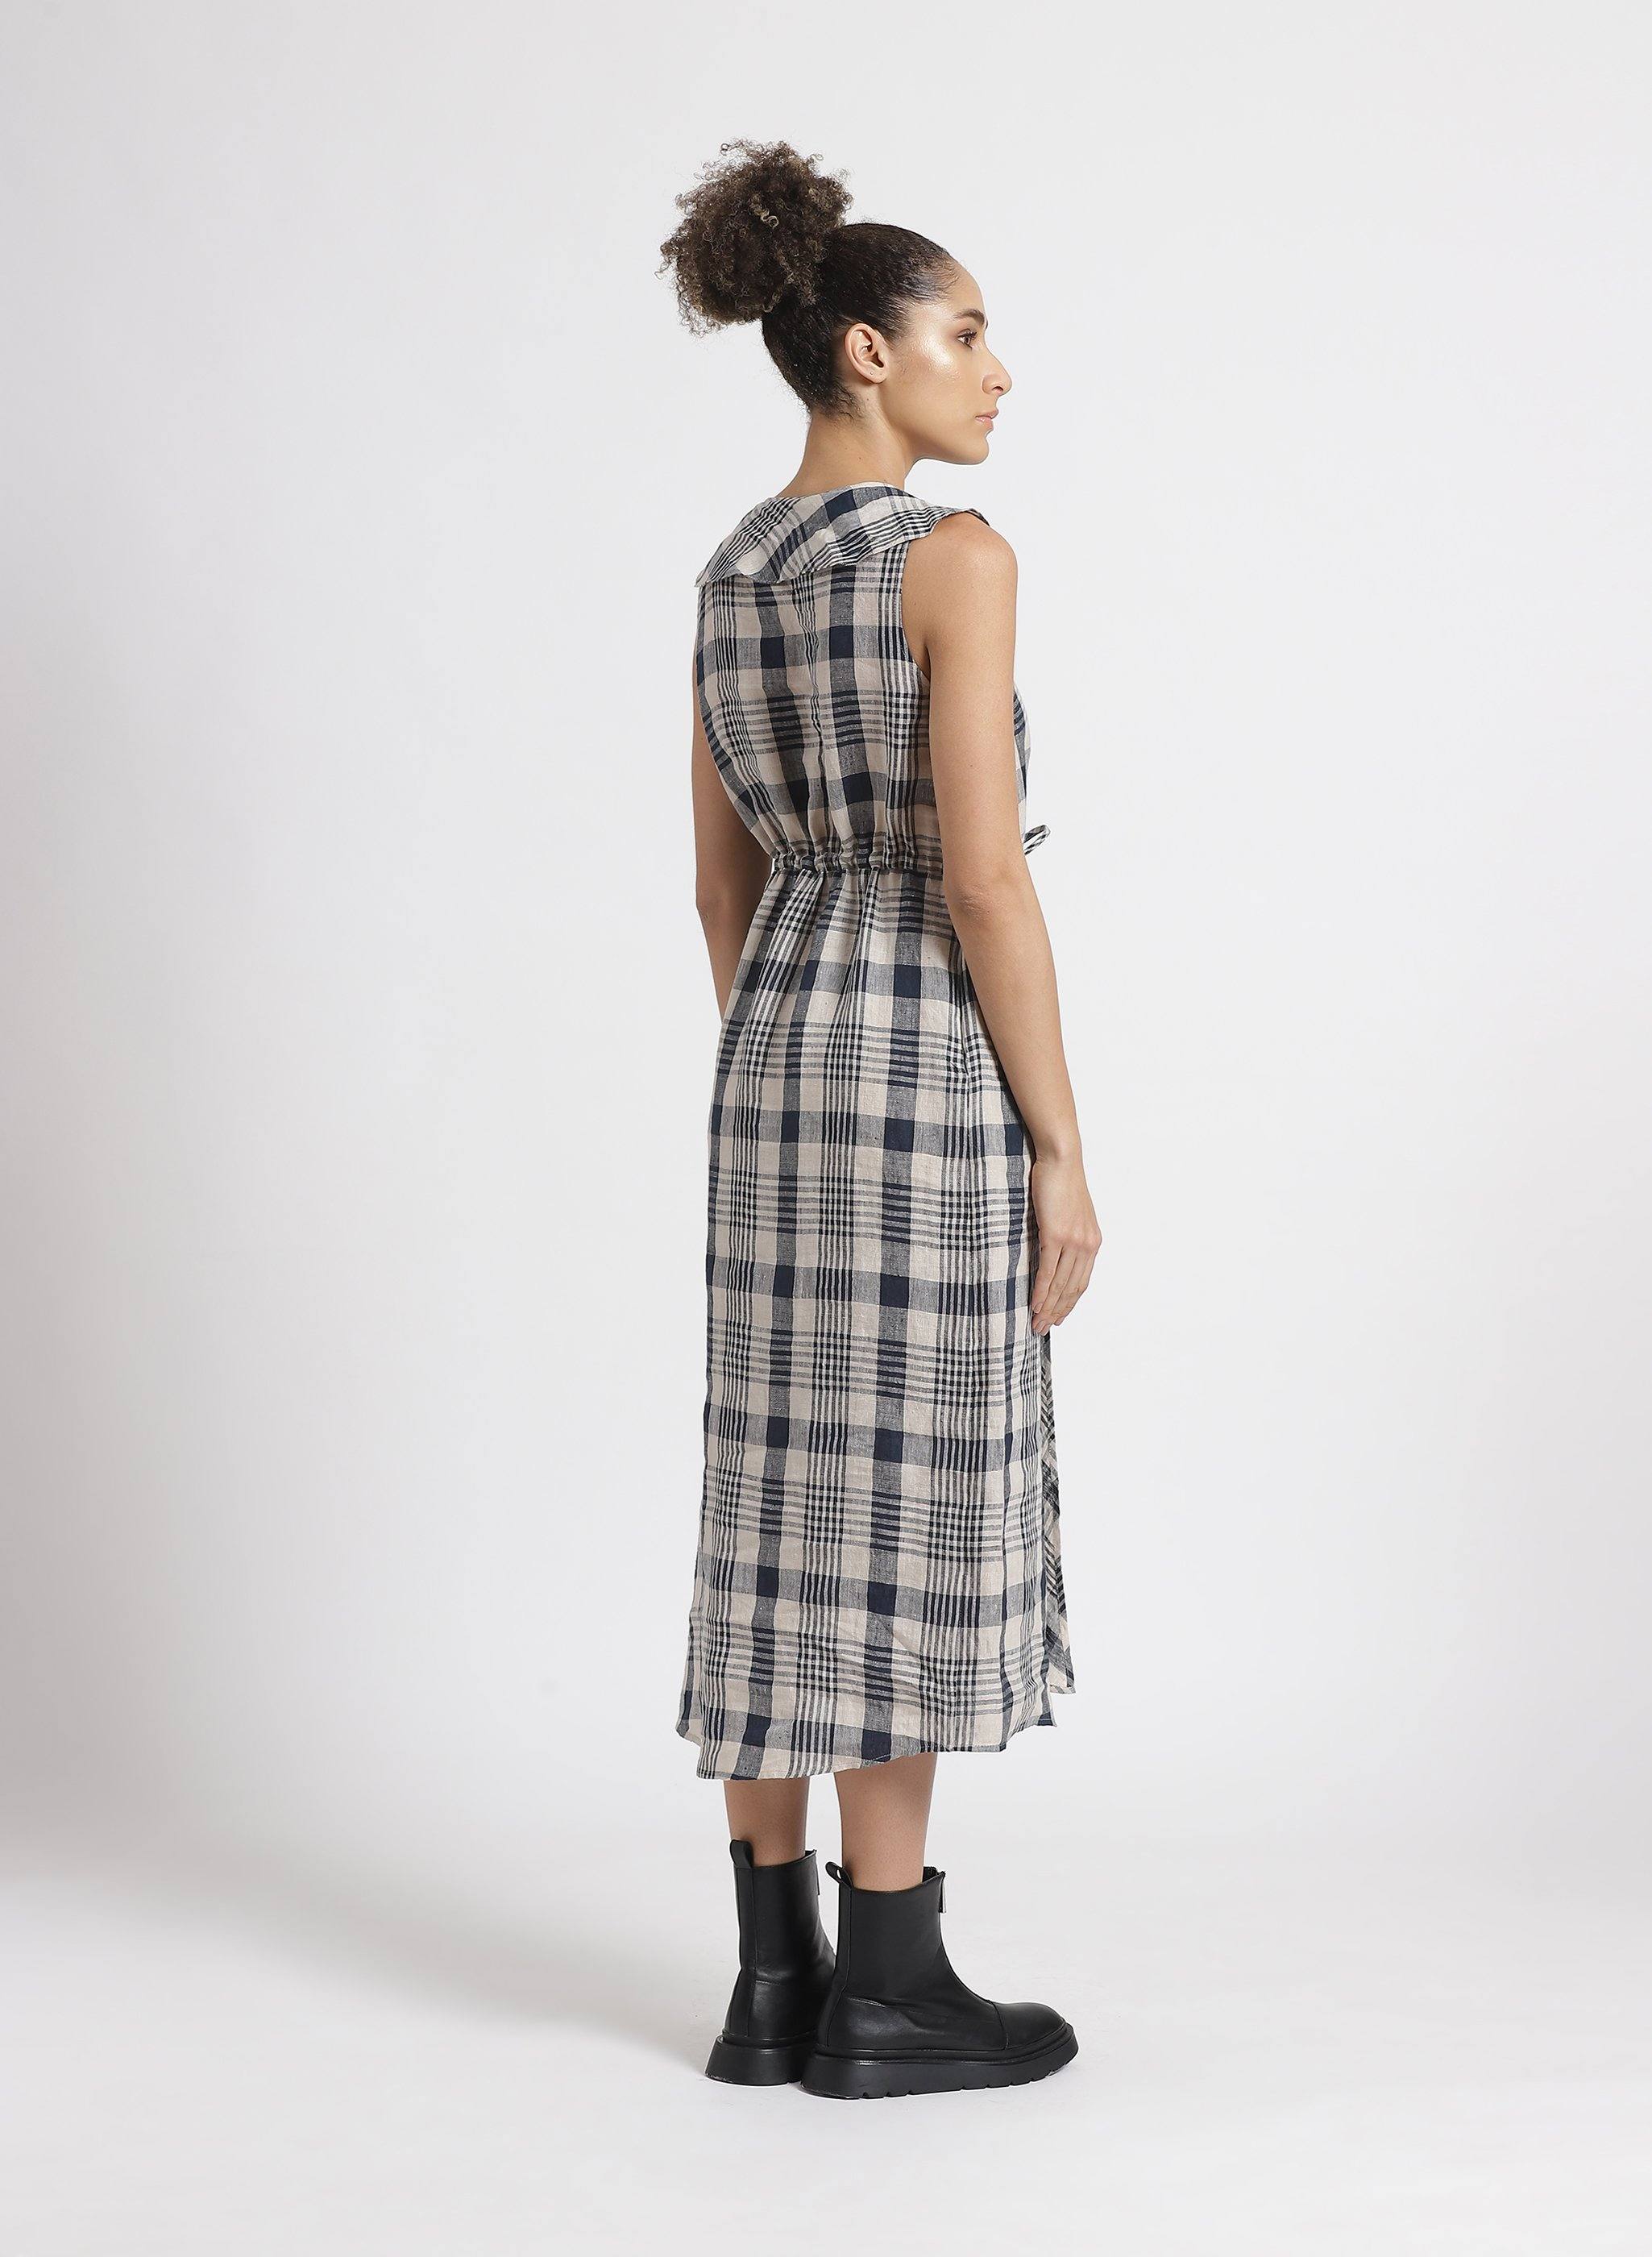 Serine Dress- Genes online store 2020